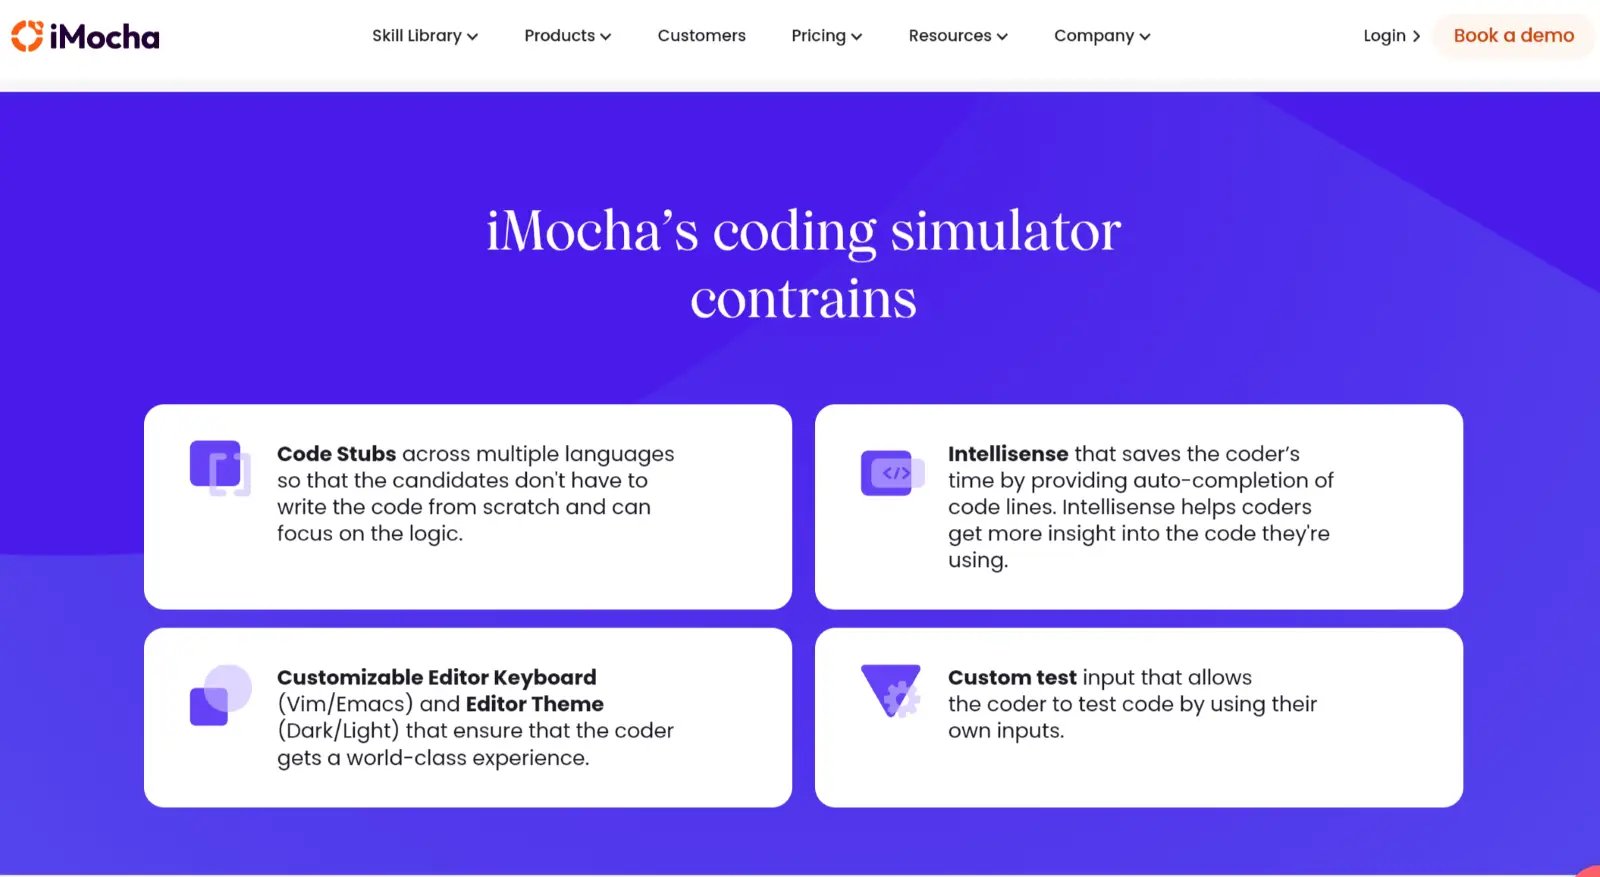 iMocha's coding simulator